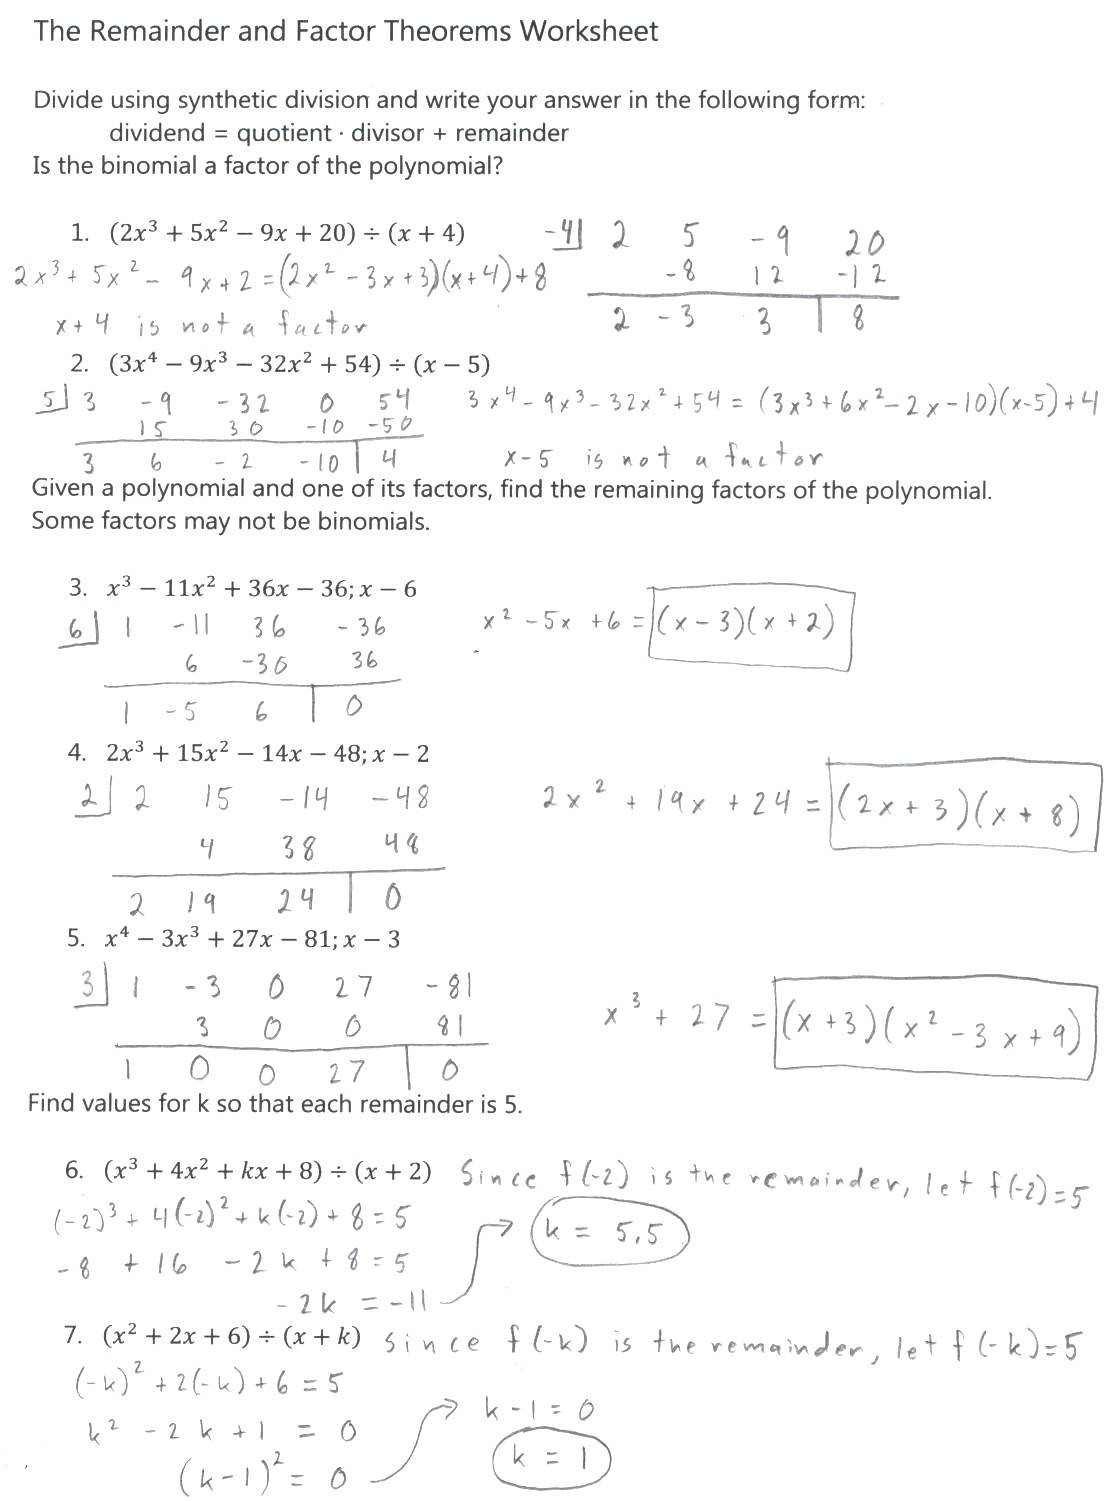 Algebra 2 Factoring Worksheet Algebra 2 Factoring Worksheet with Answers